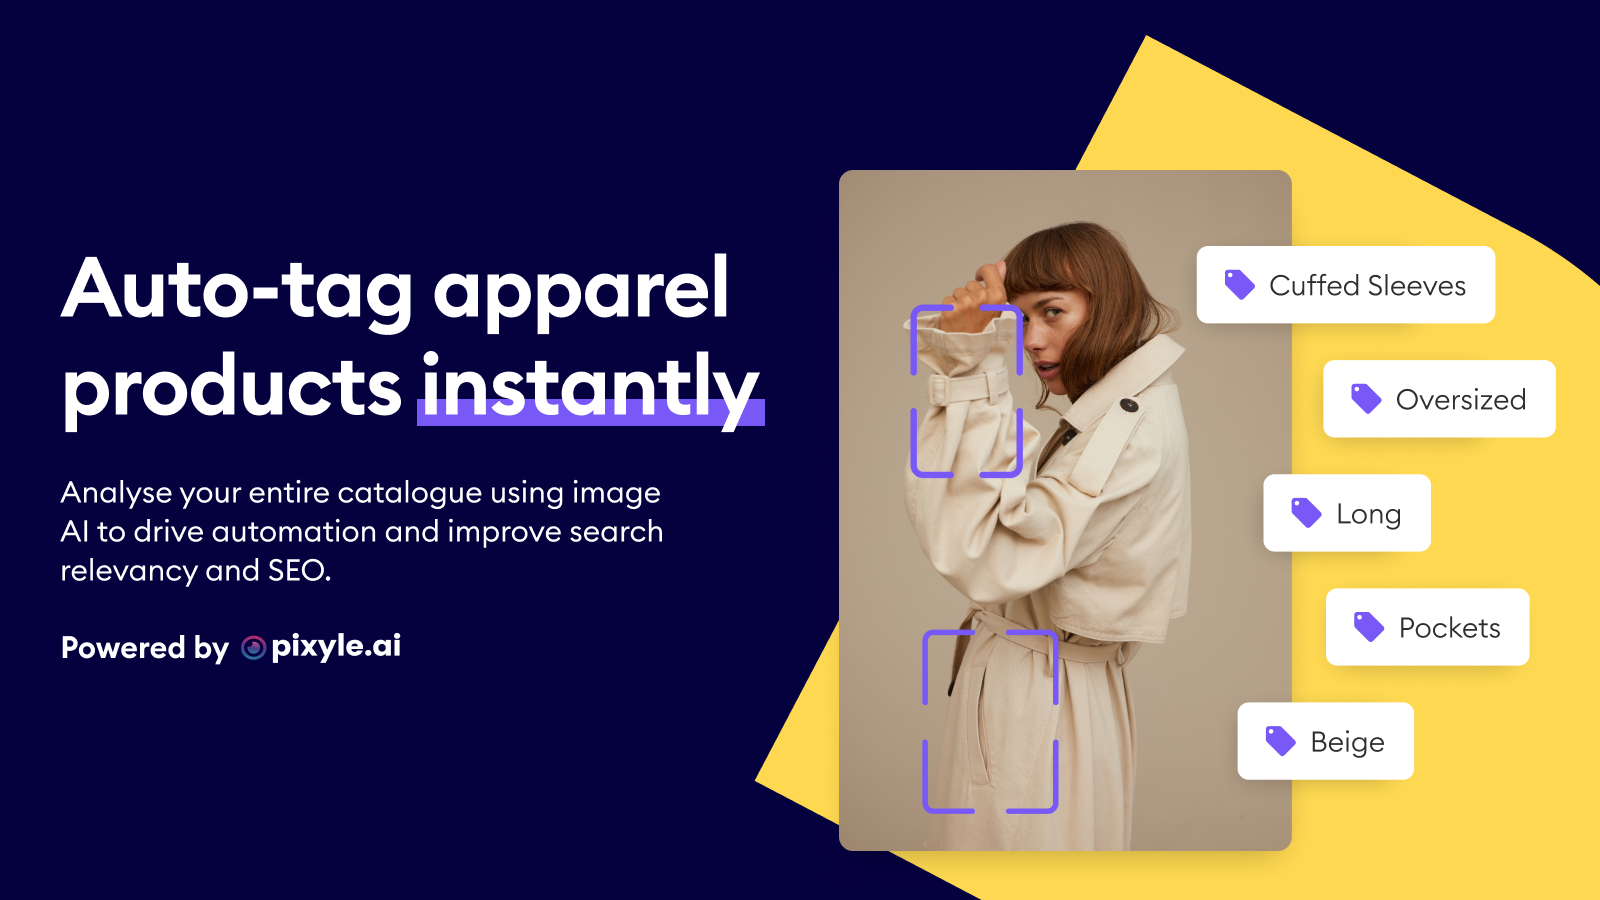 Tag kledingproducten automatisch direct met Reactify Image AI